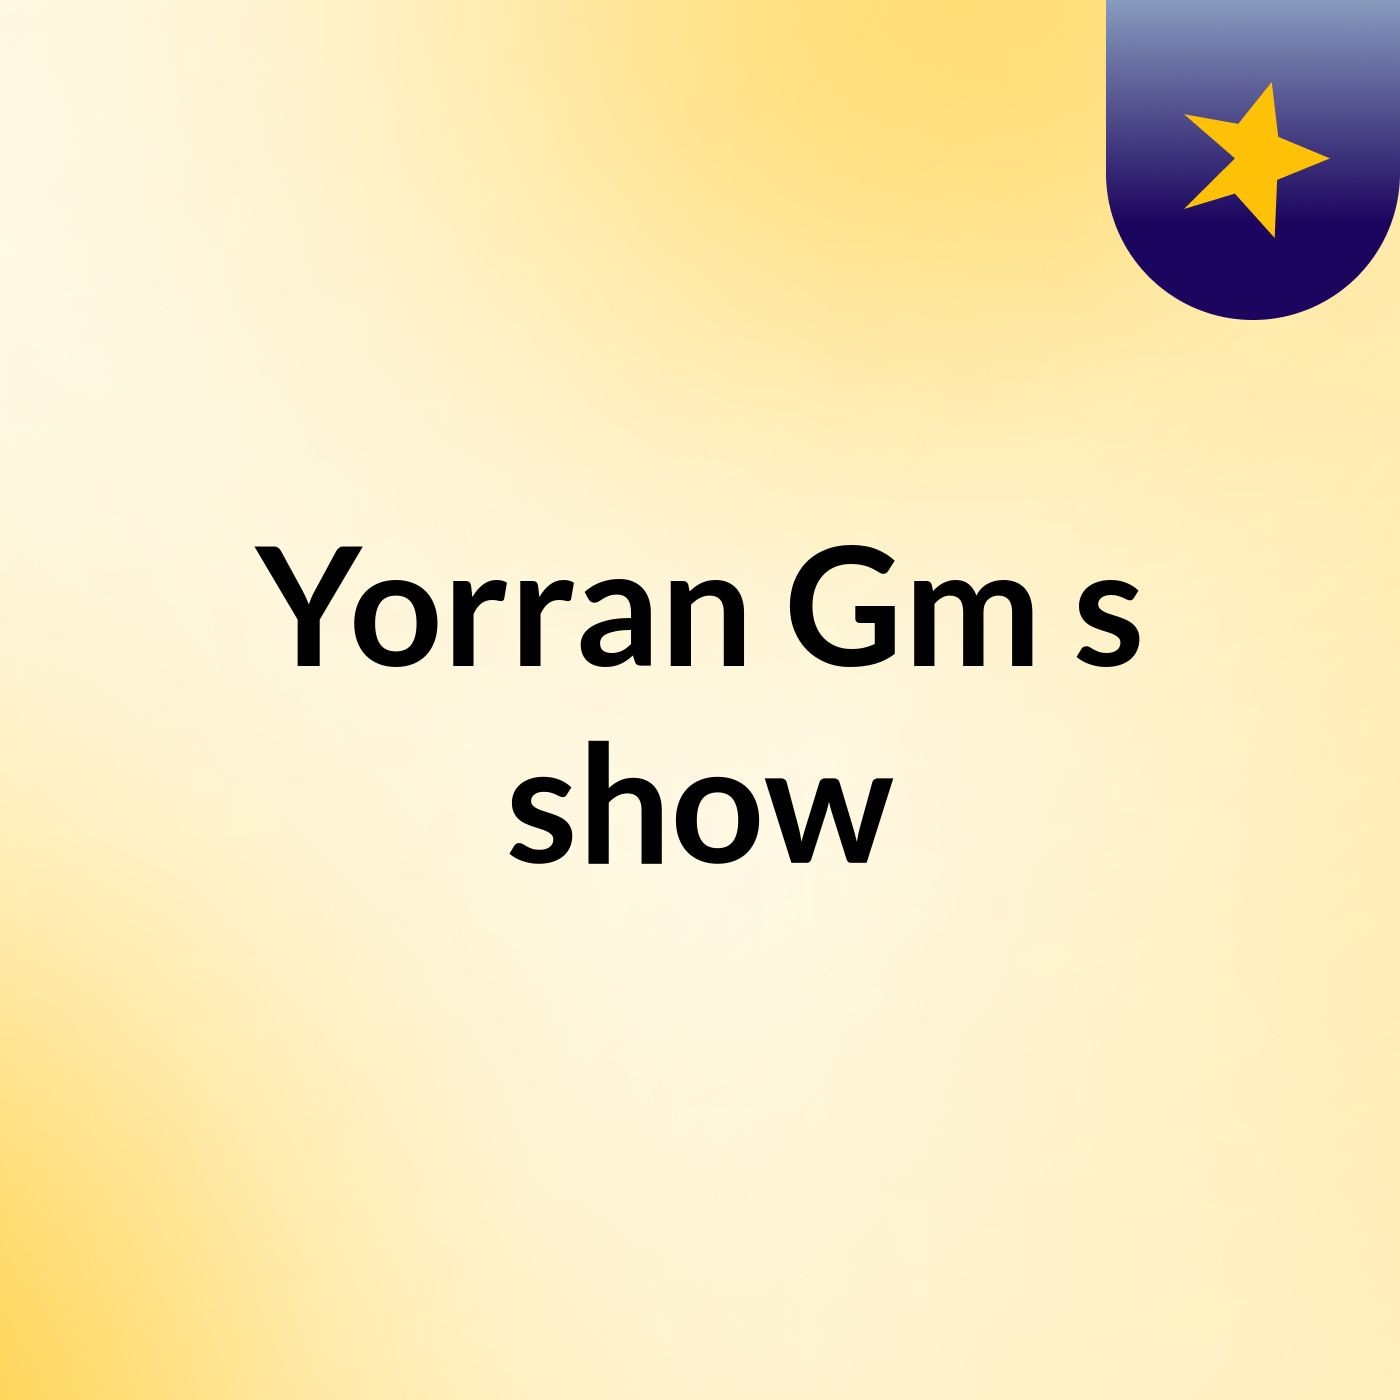 Yorran Gm's show